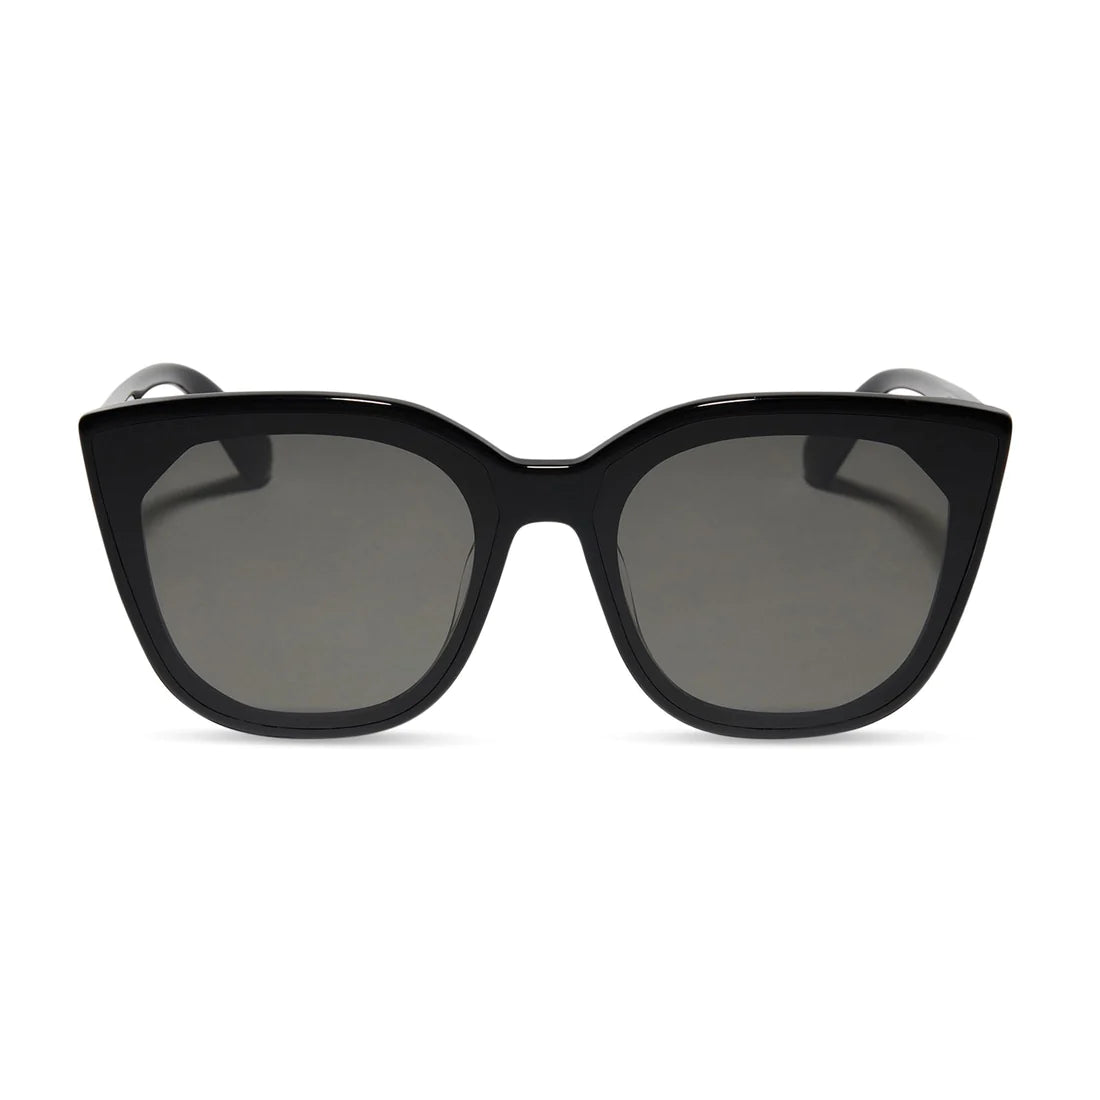 Diff Eyewear I Gjelina Sunglasses - Black + Grey